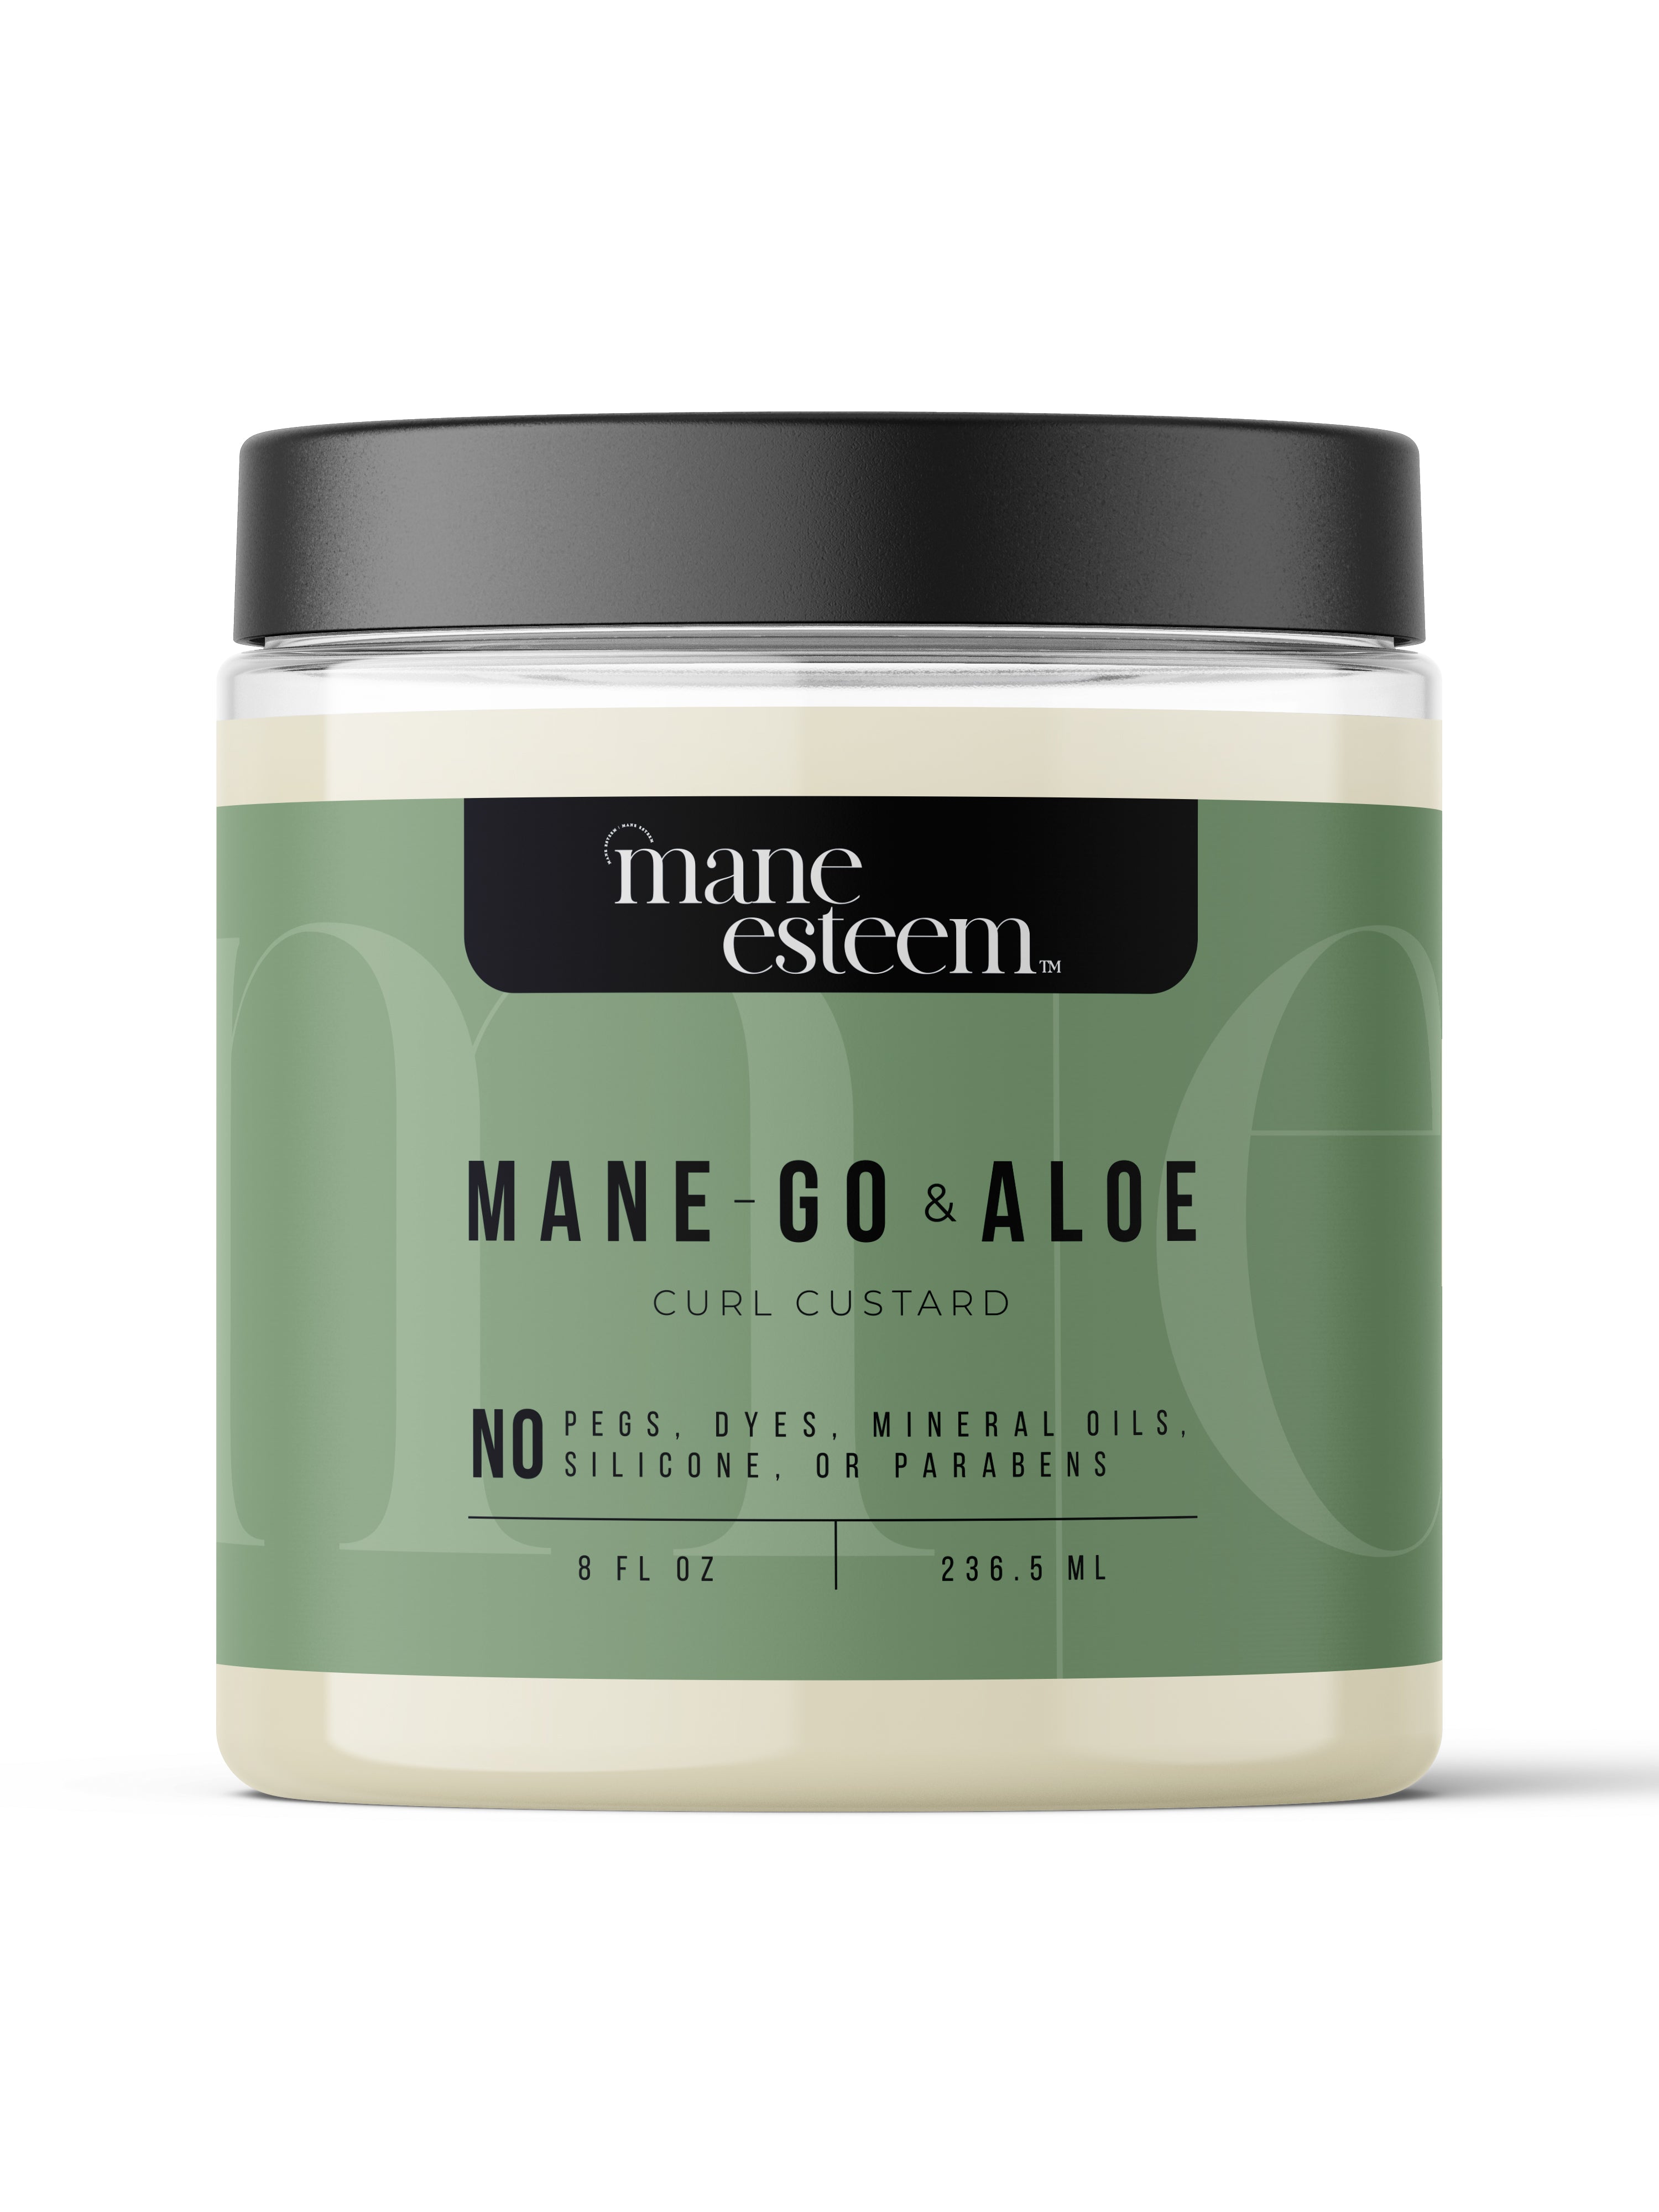 Mane-go & Aloe Curl Custard